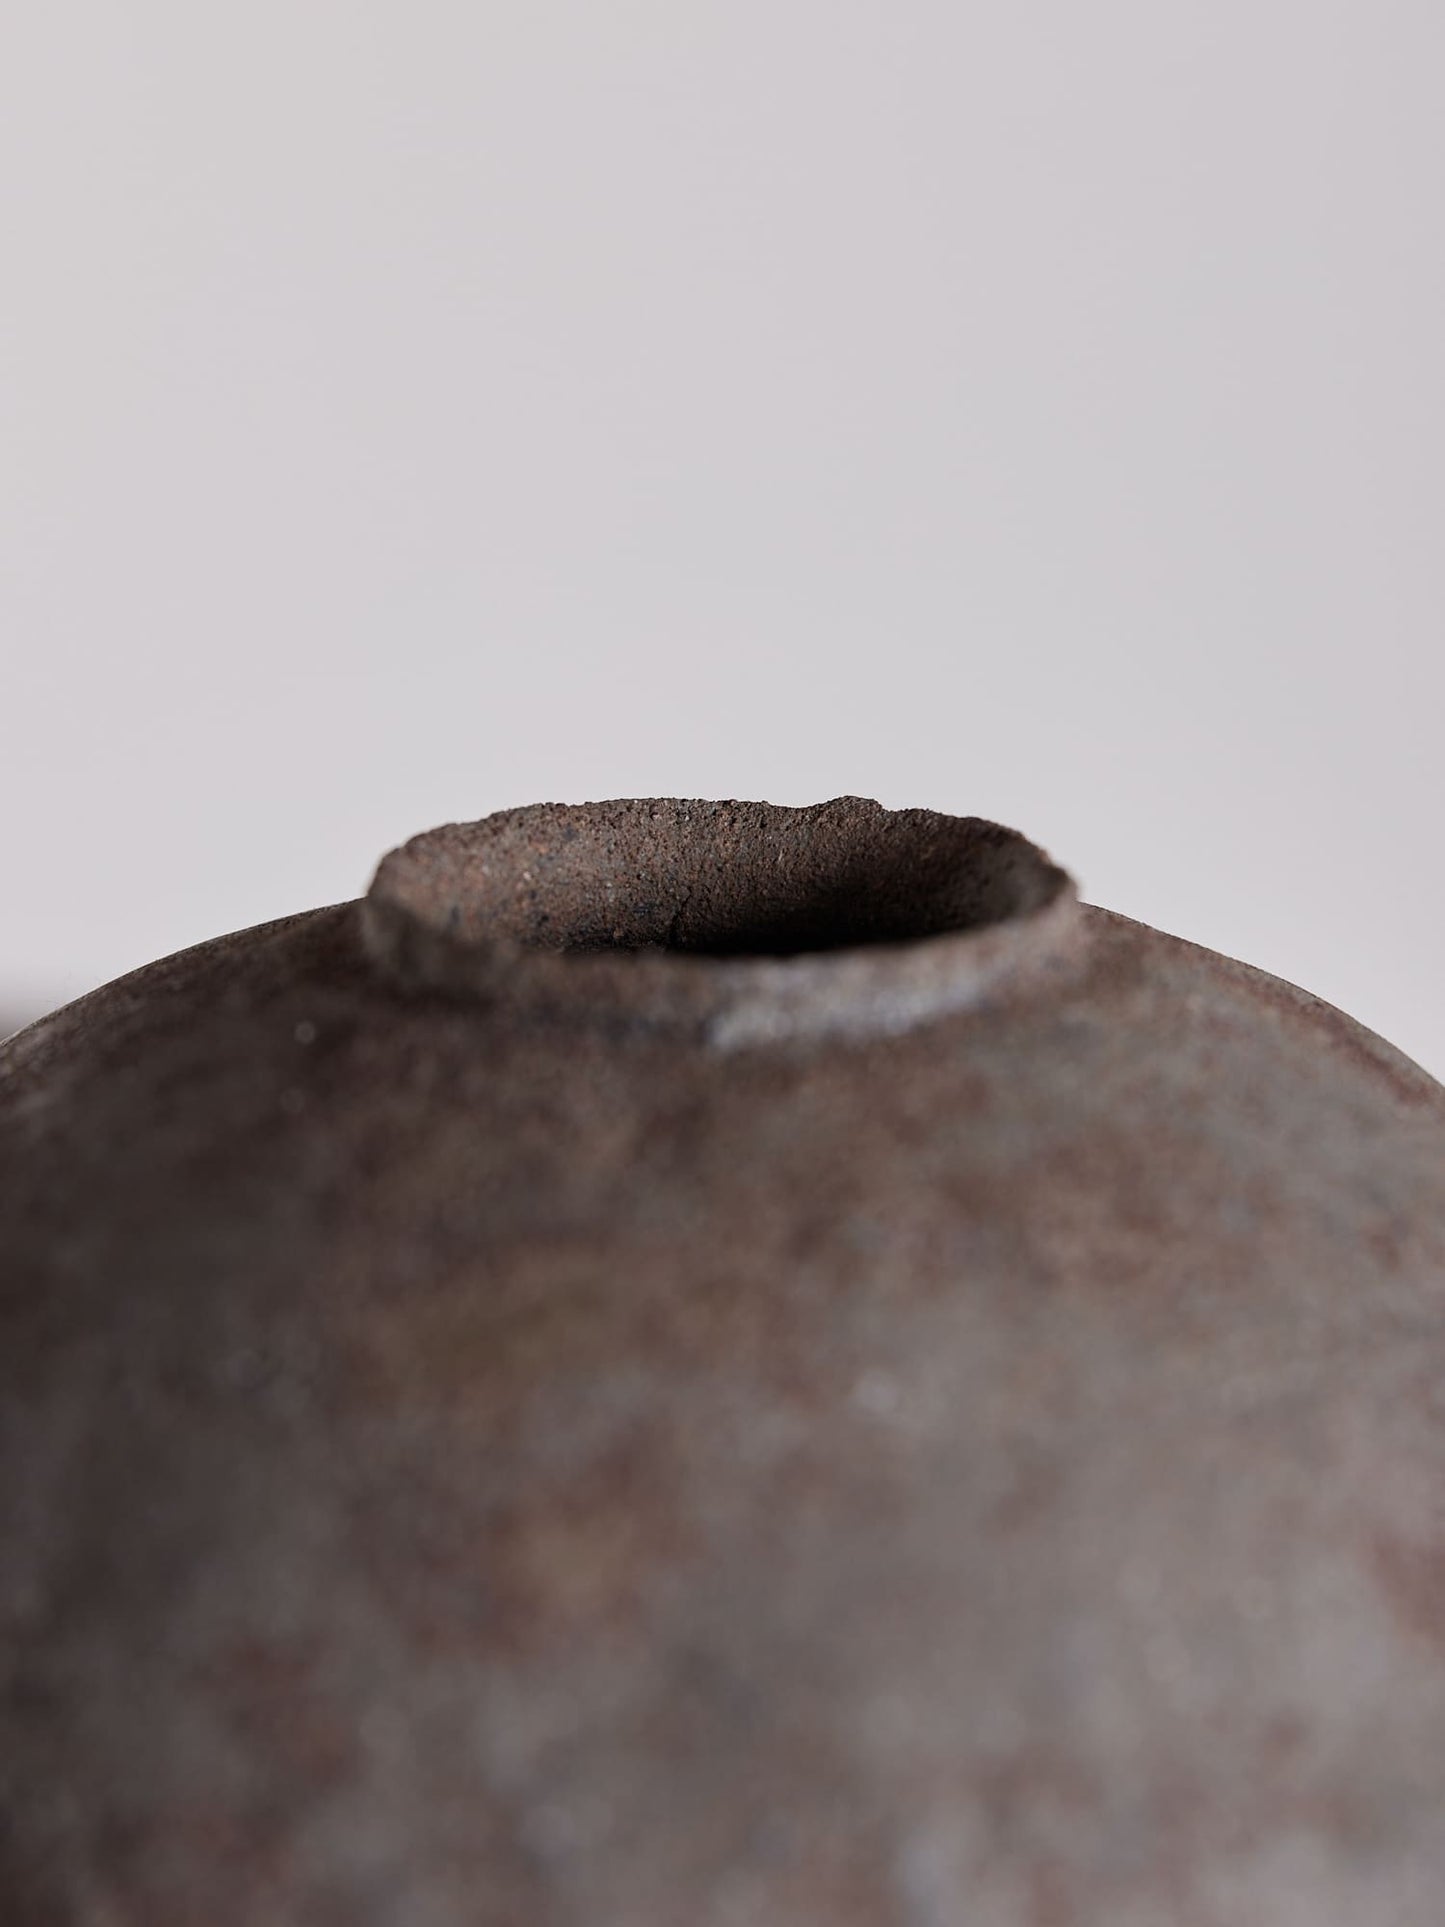 Rimpei Watanabe | Bizen Ceramic Vase